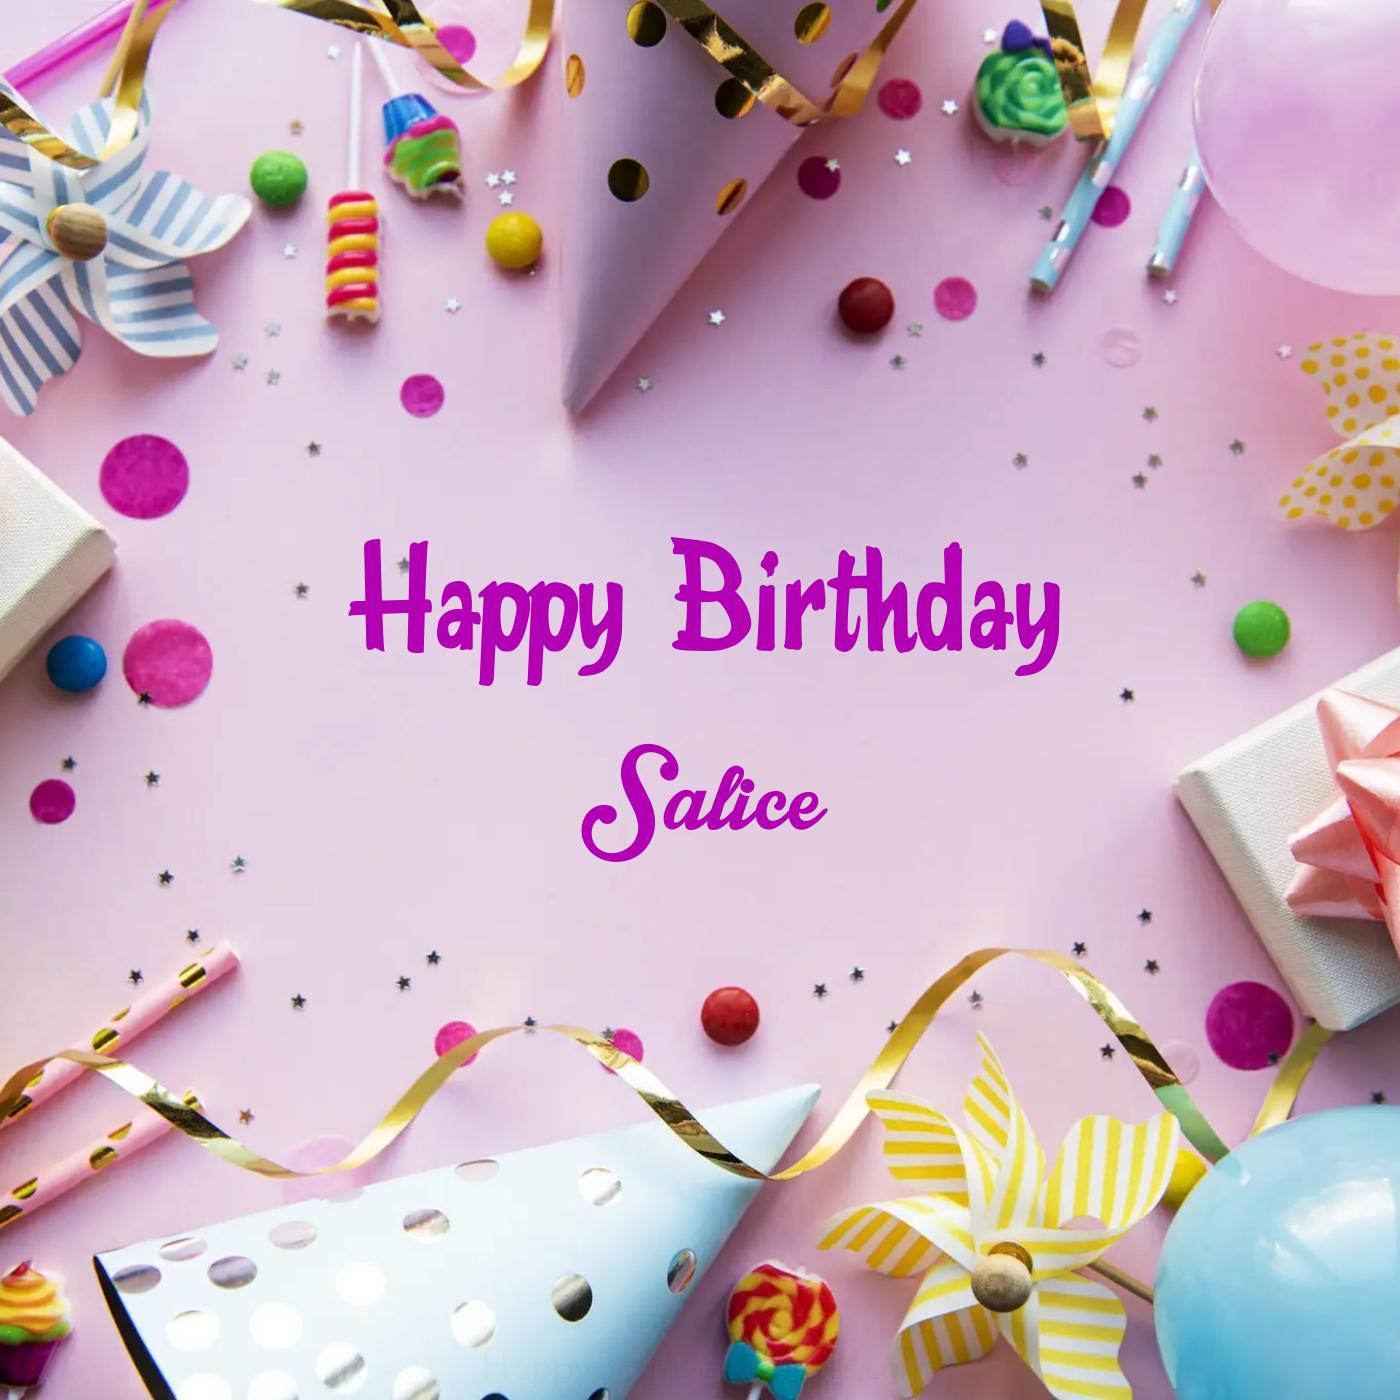 Happy Birthday Salice Party Background Card